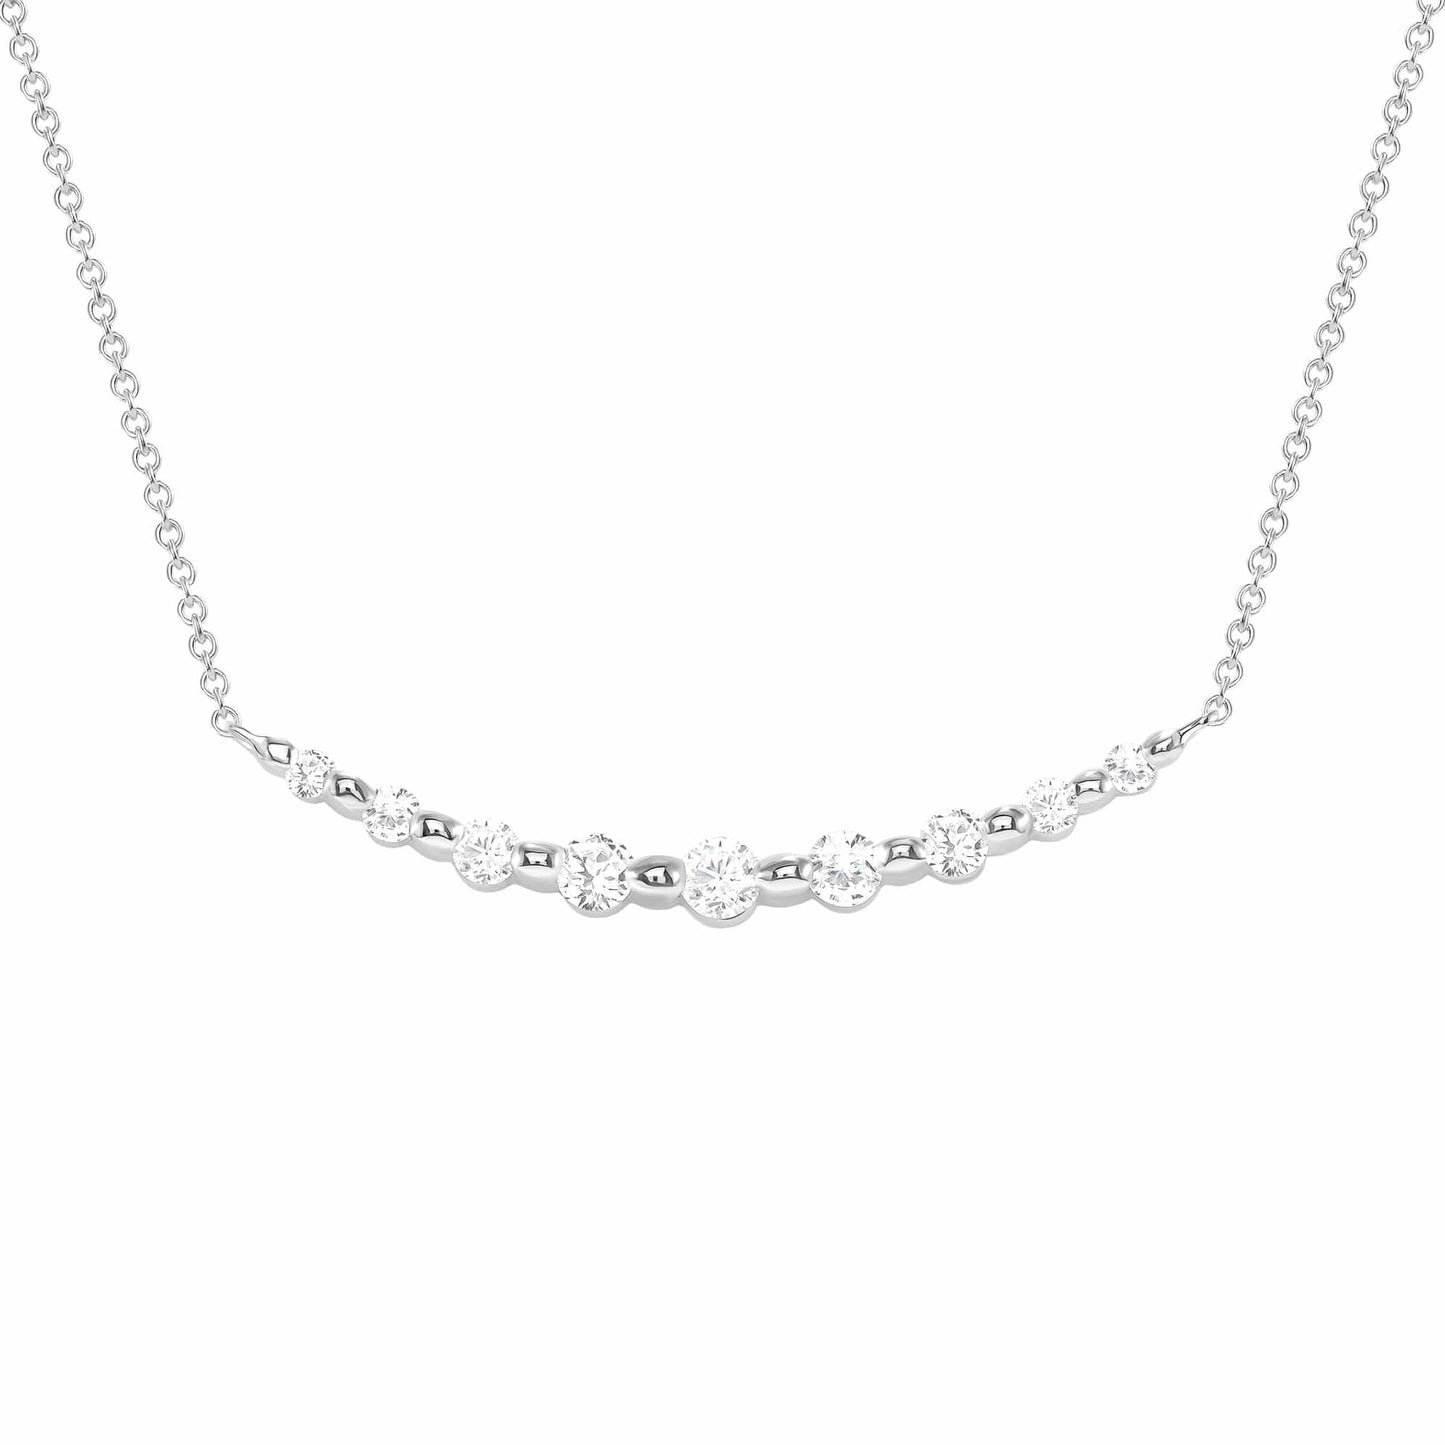 18K White Gold Diamond Necklace Set - 2215301